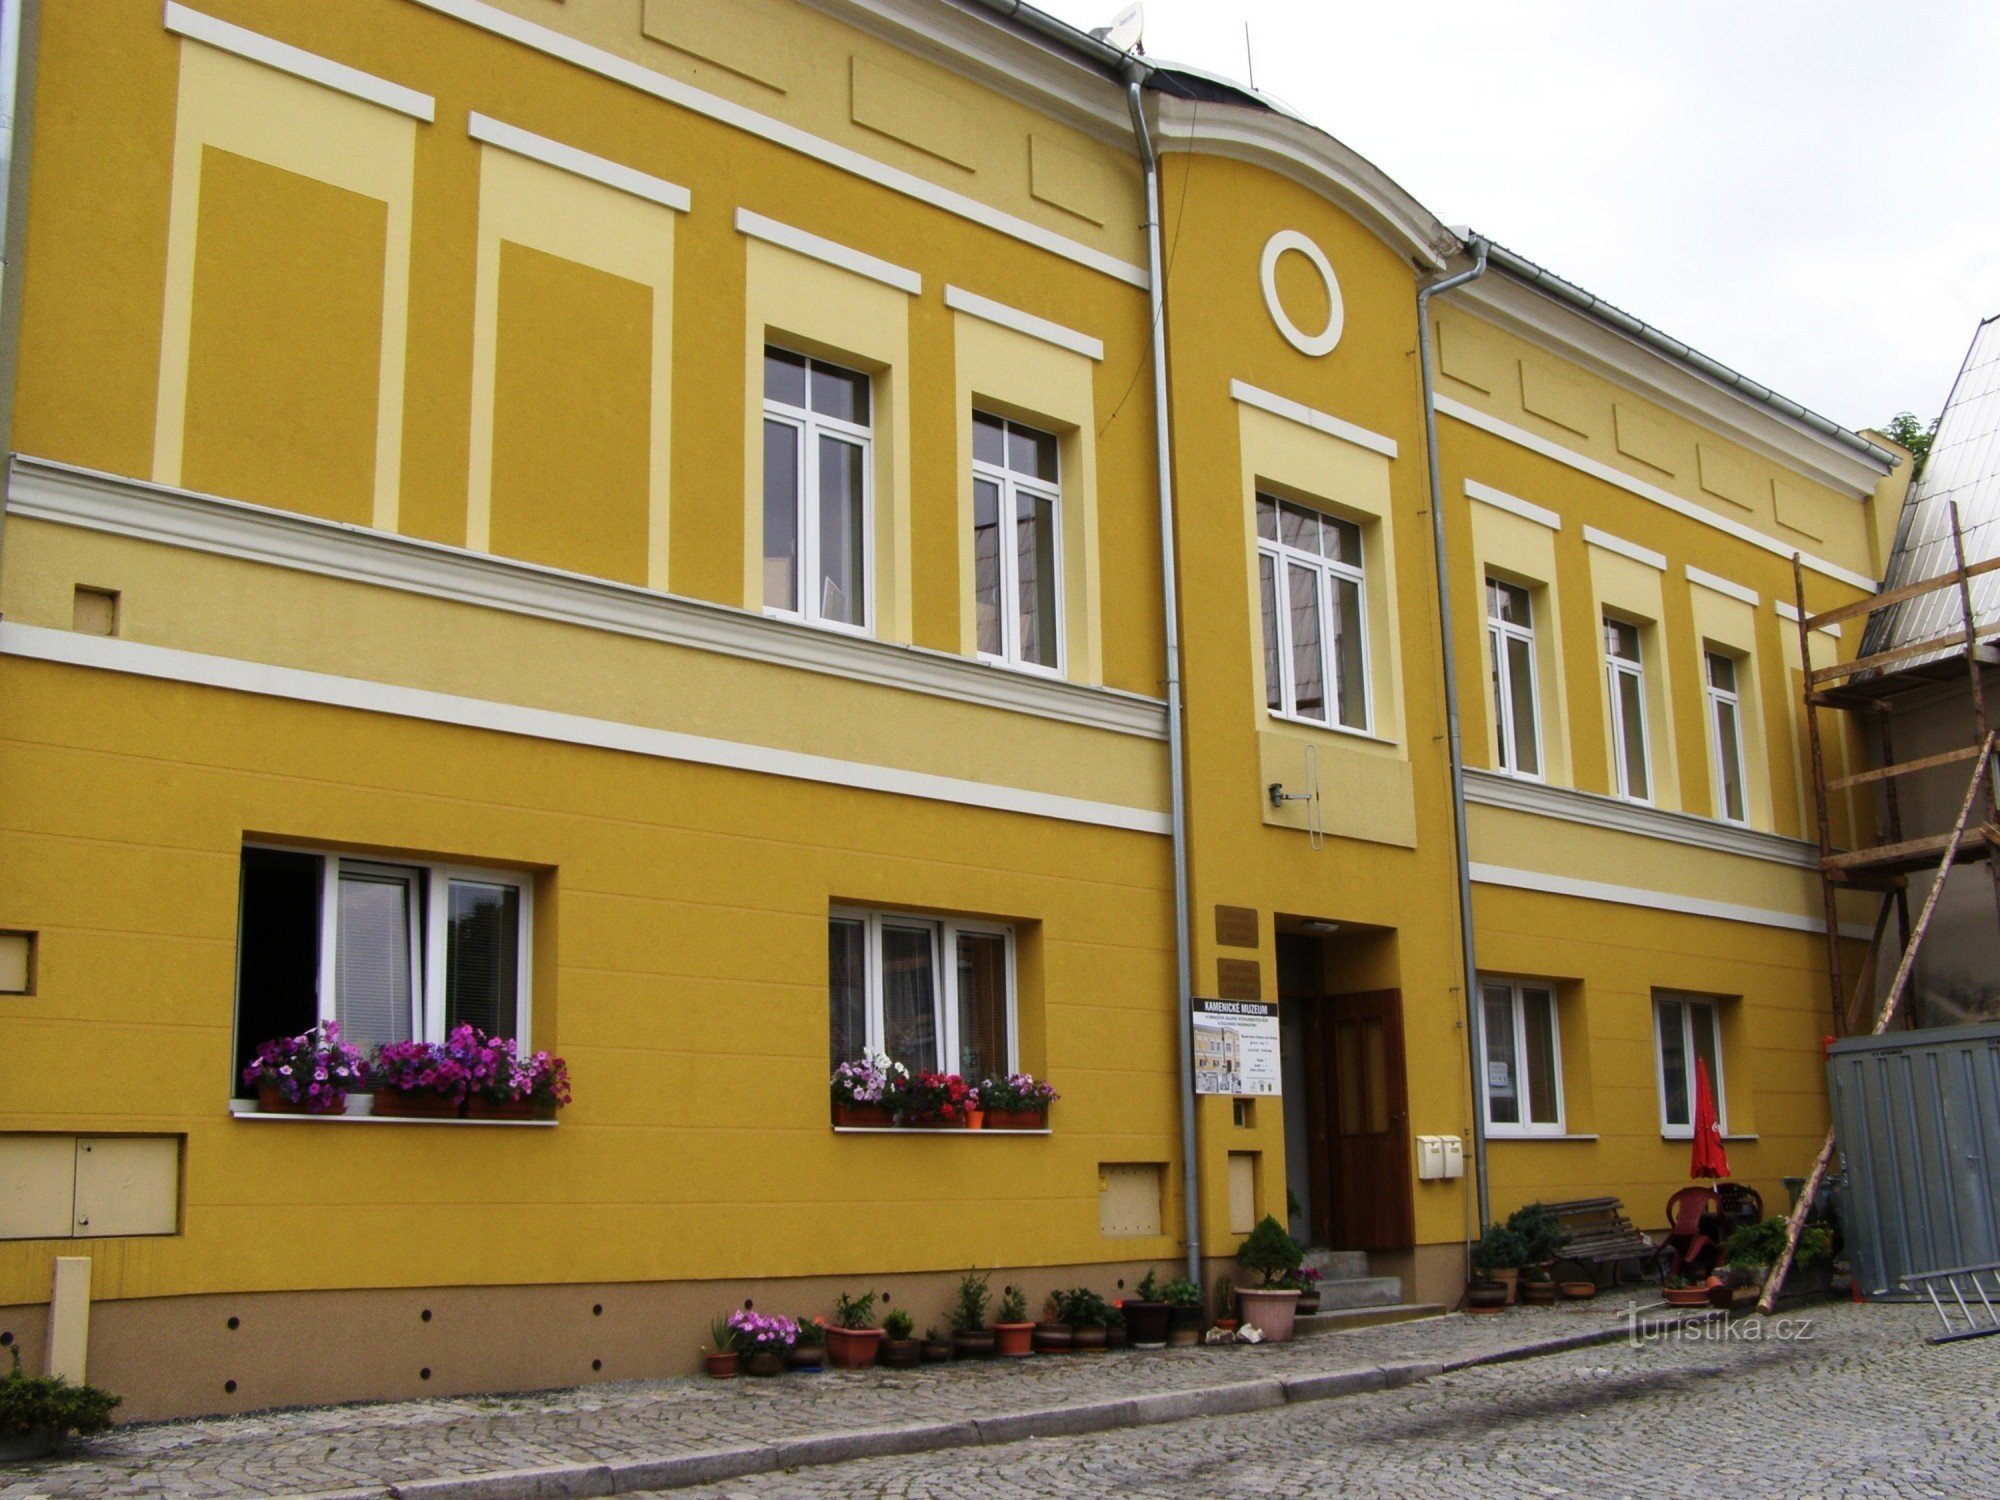 Žulová - Kamenické muzeum, Turistické infocentrum, knihovna